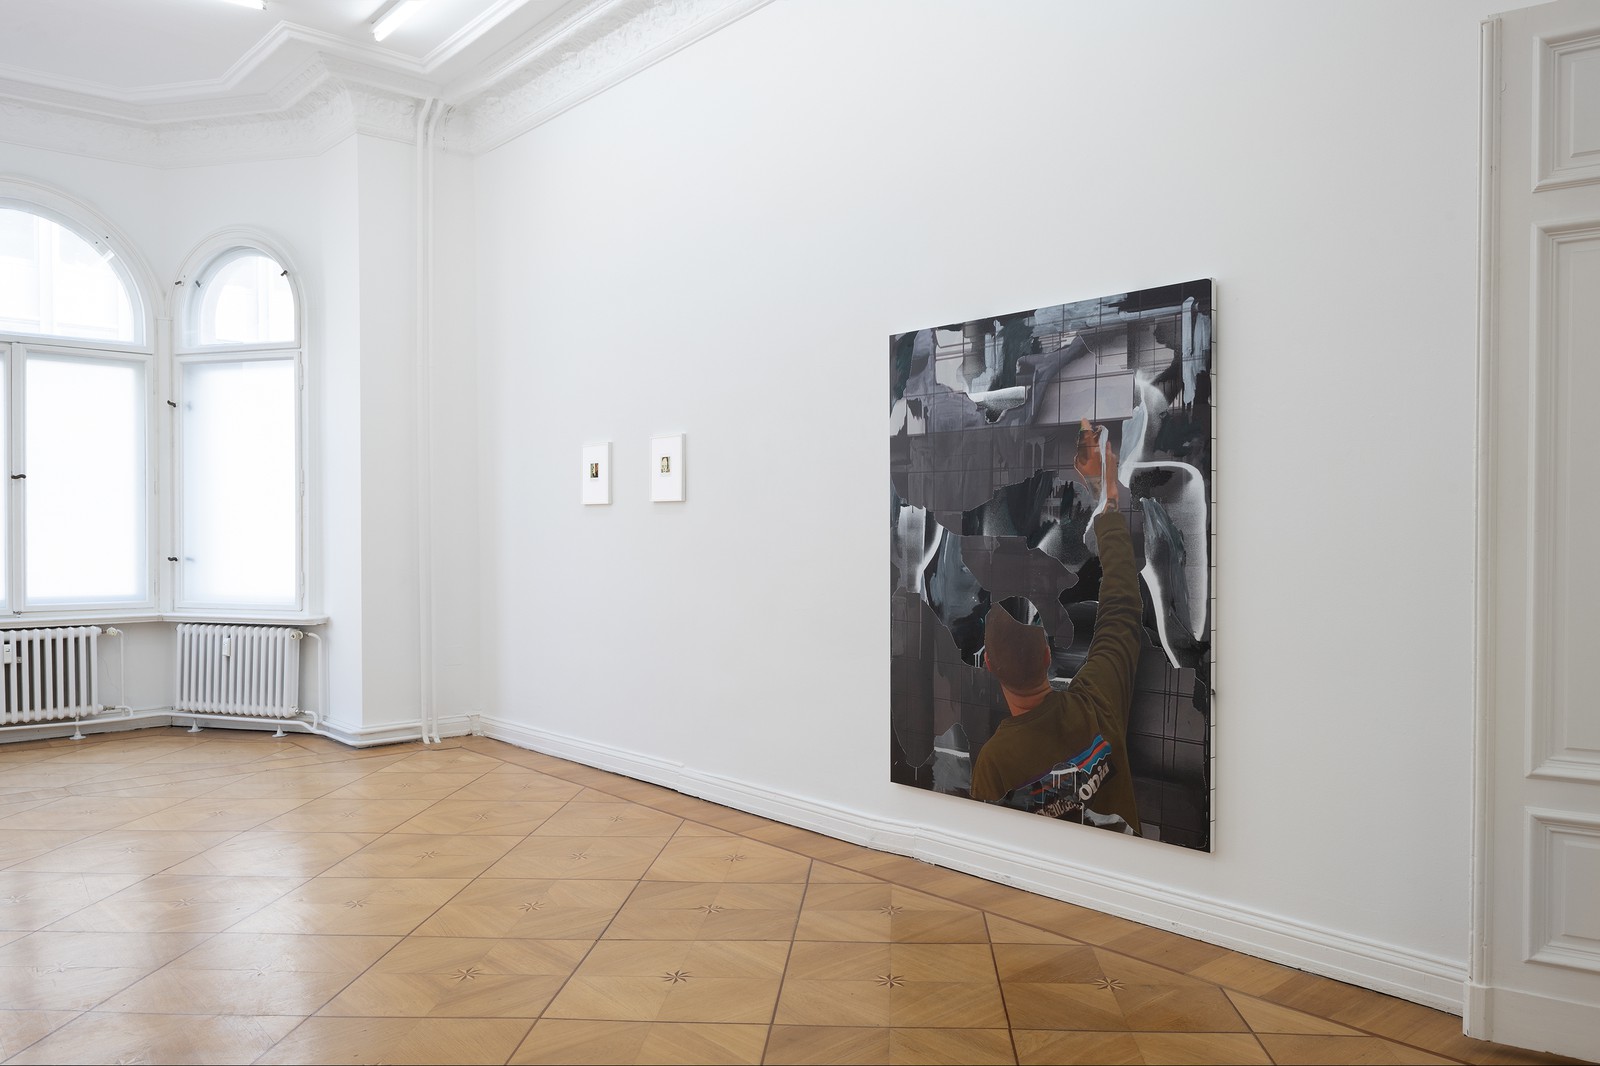 Installation view, Selbstbildnis, Société, Berlin, 2019